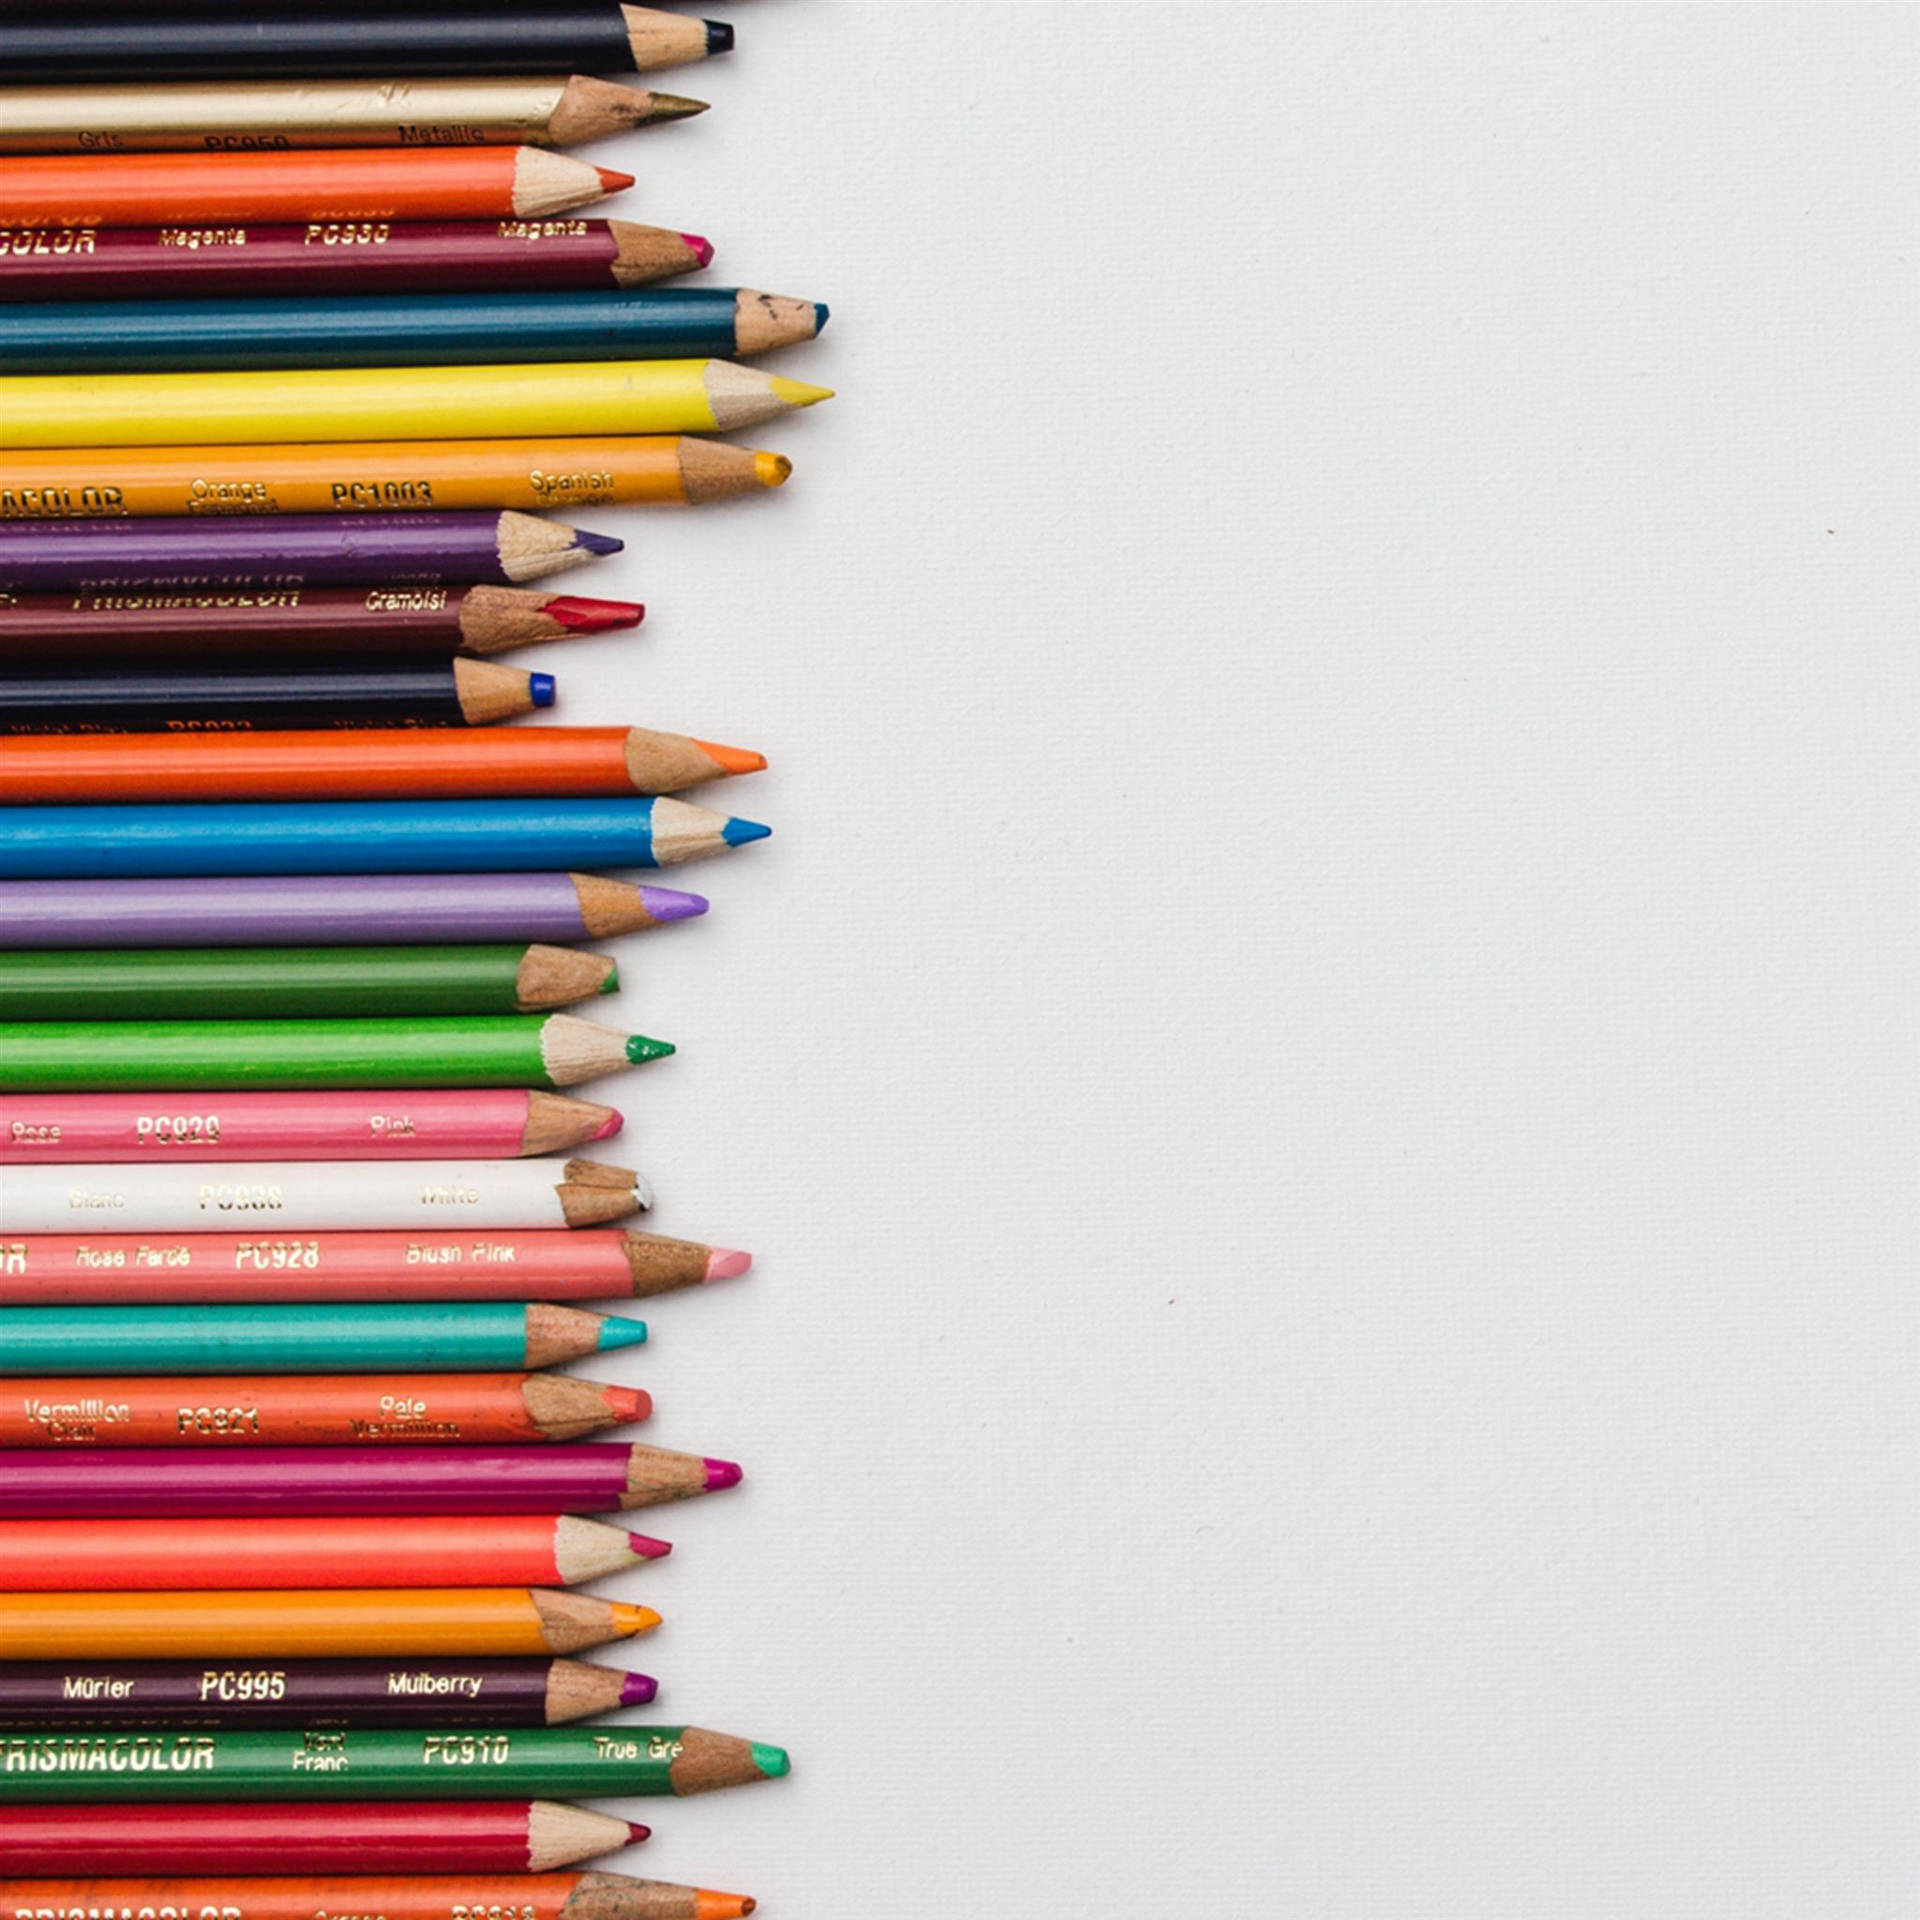 Ipad Pro 12.9 Colored Pencils Background